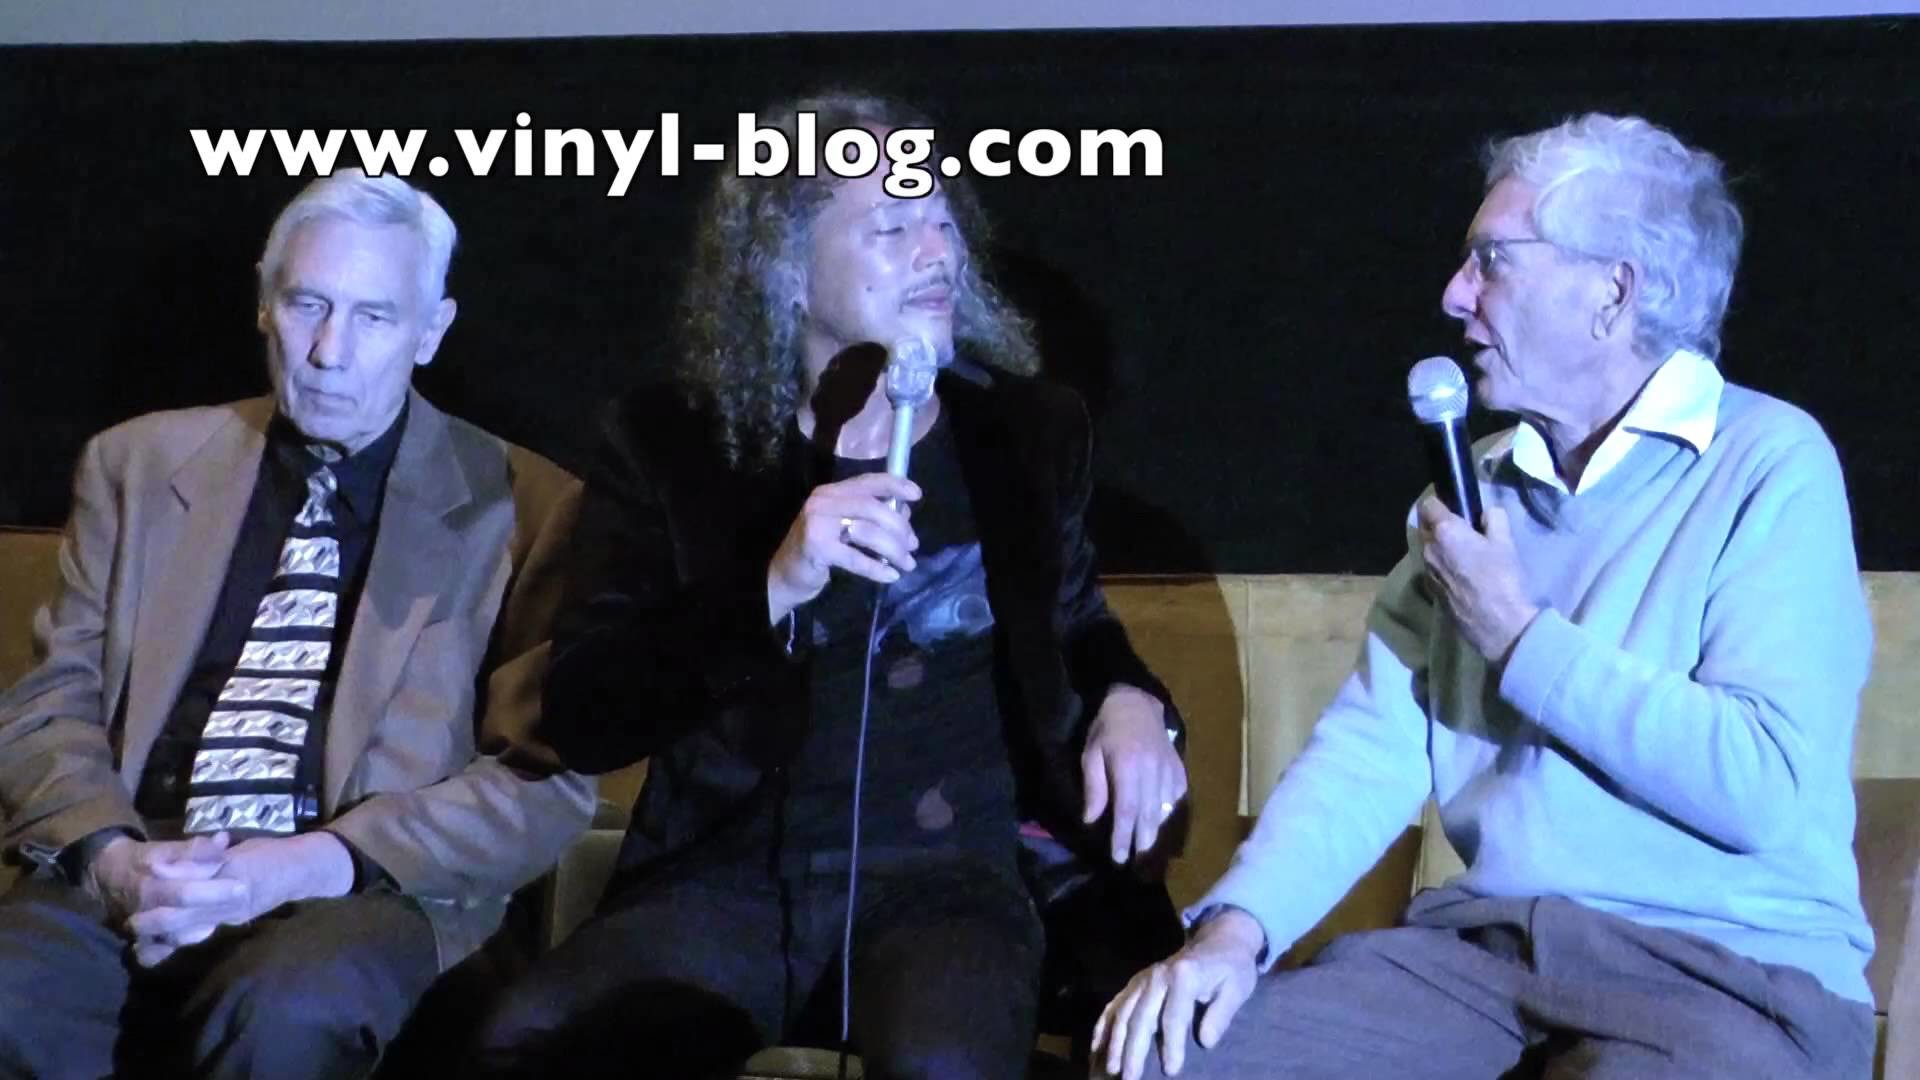 1920x1080 Kirk Hammett and Bela Lugosi Jr. on "The Black Cat" and "White Zombie"  horror movies screening